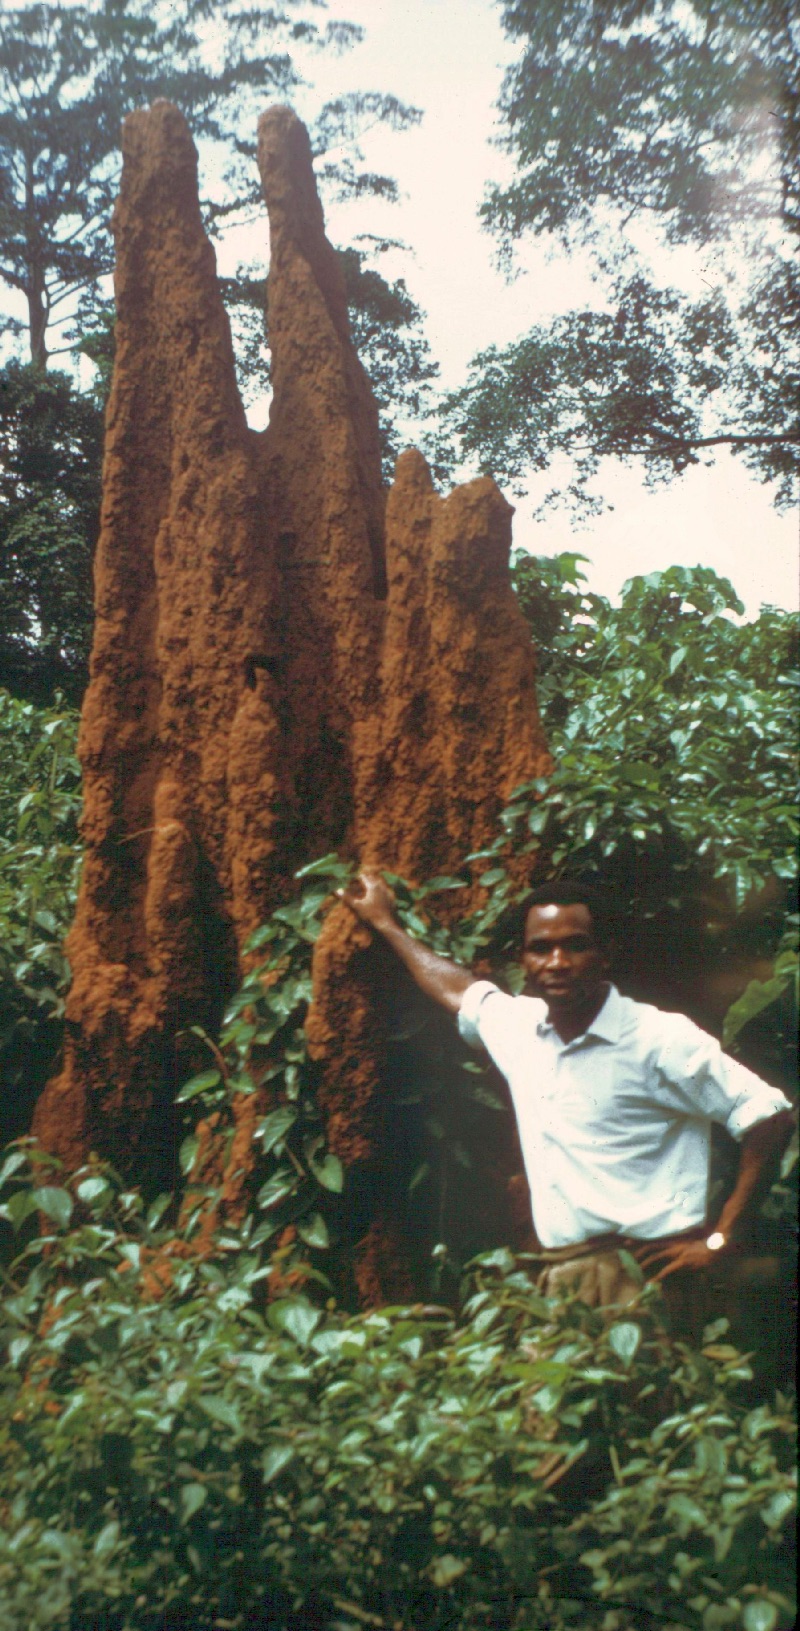 Termite mound, Nigeria. Image credit: I.Baillie